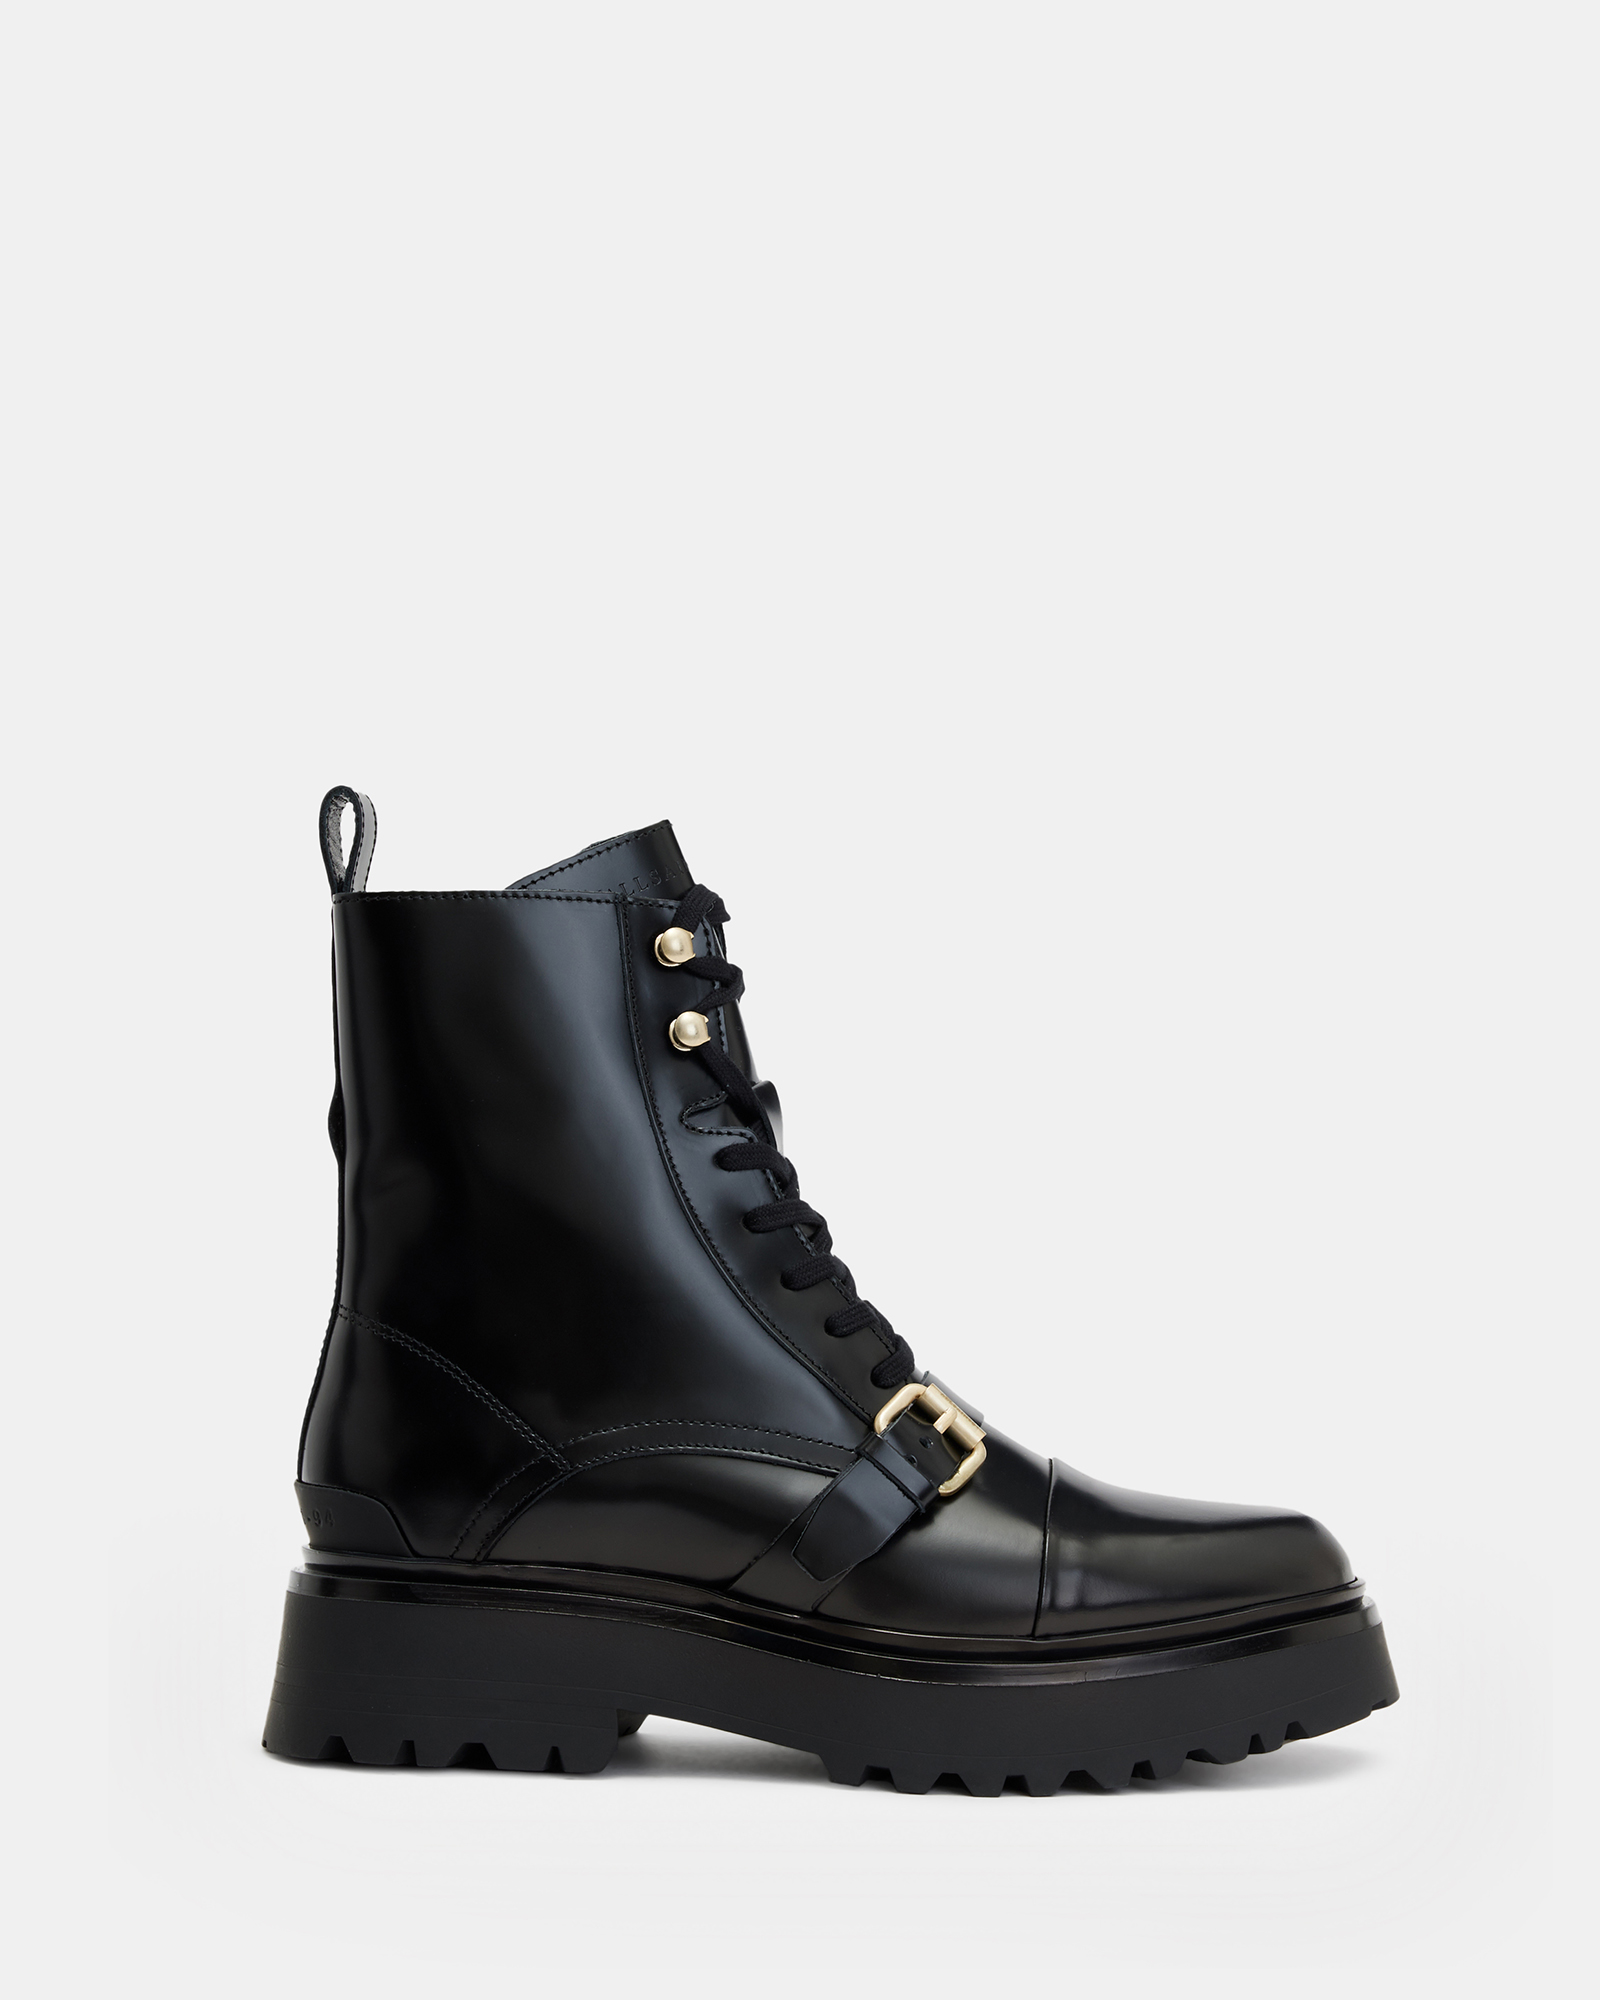 AllSaints Stellar Leather Boots,, Black